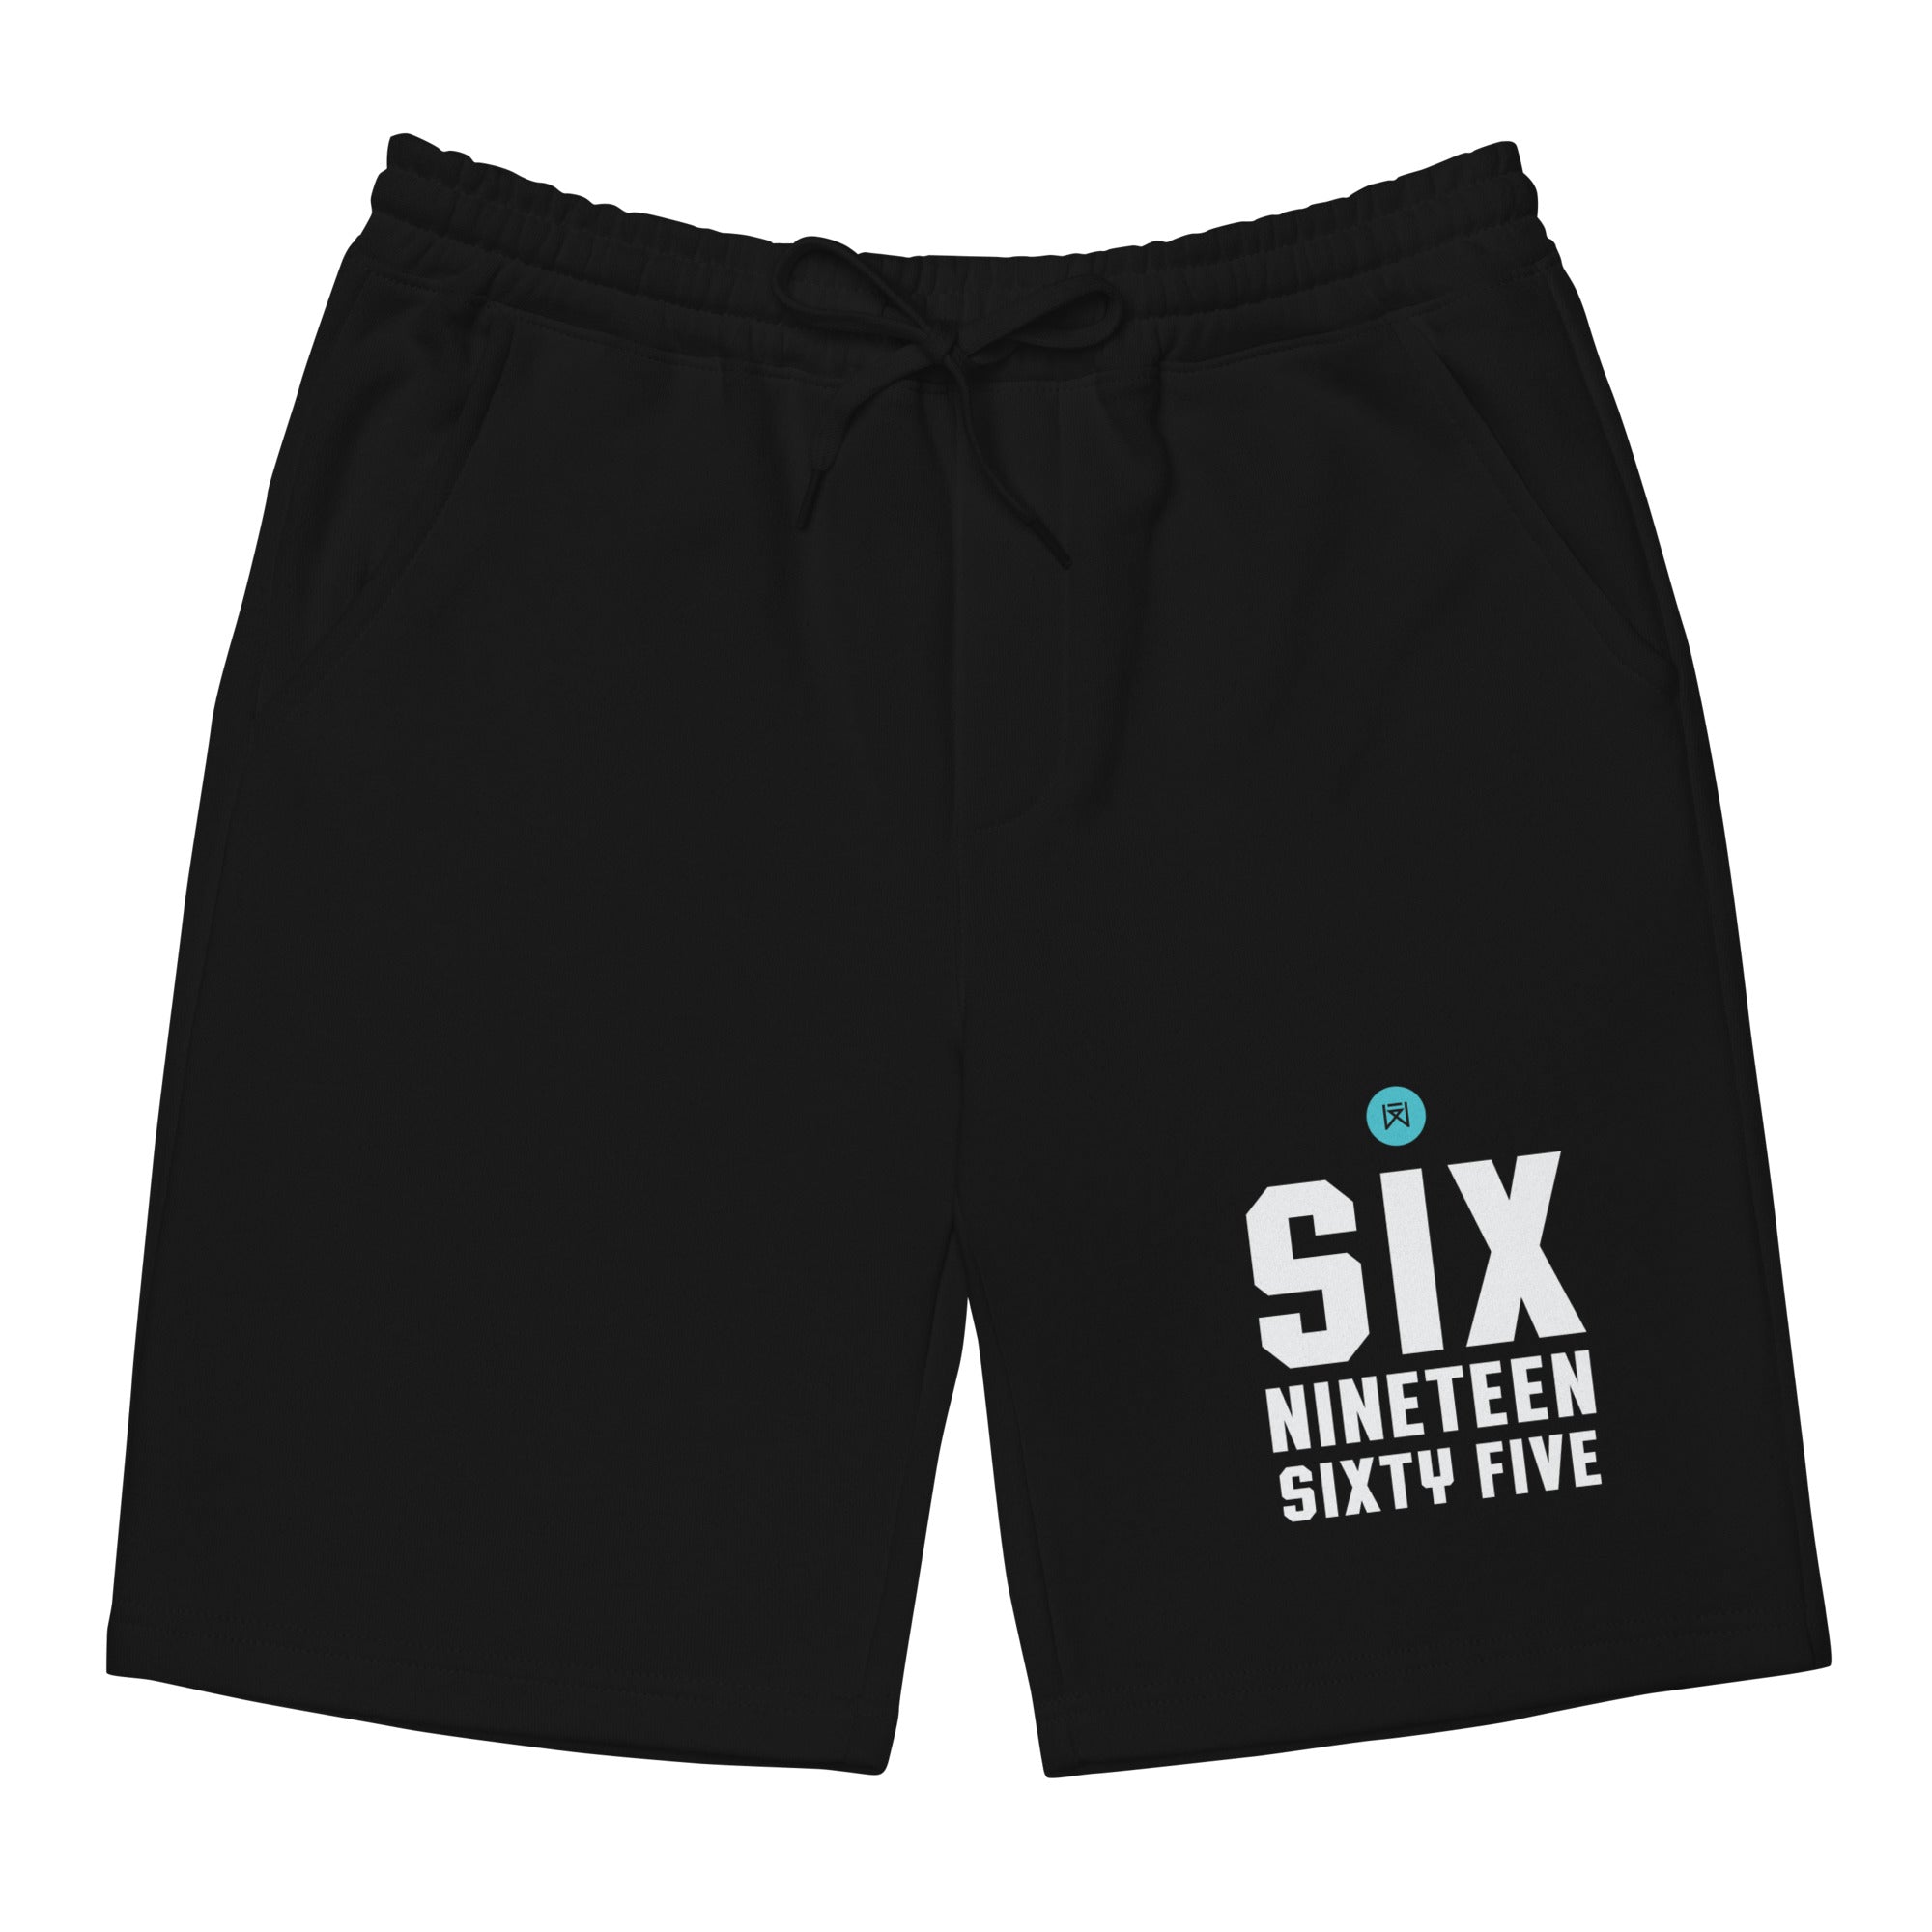 Six Nineteen Sixty Five - Juneteenth Shorts (Onyx)